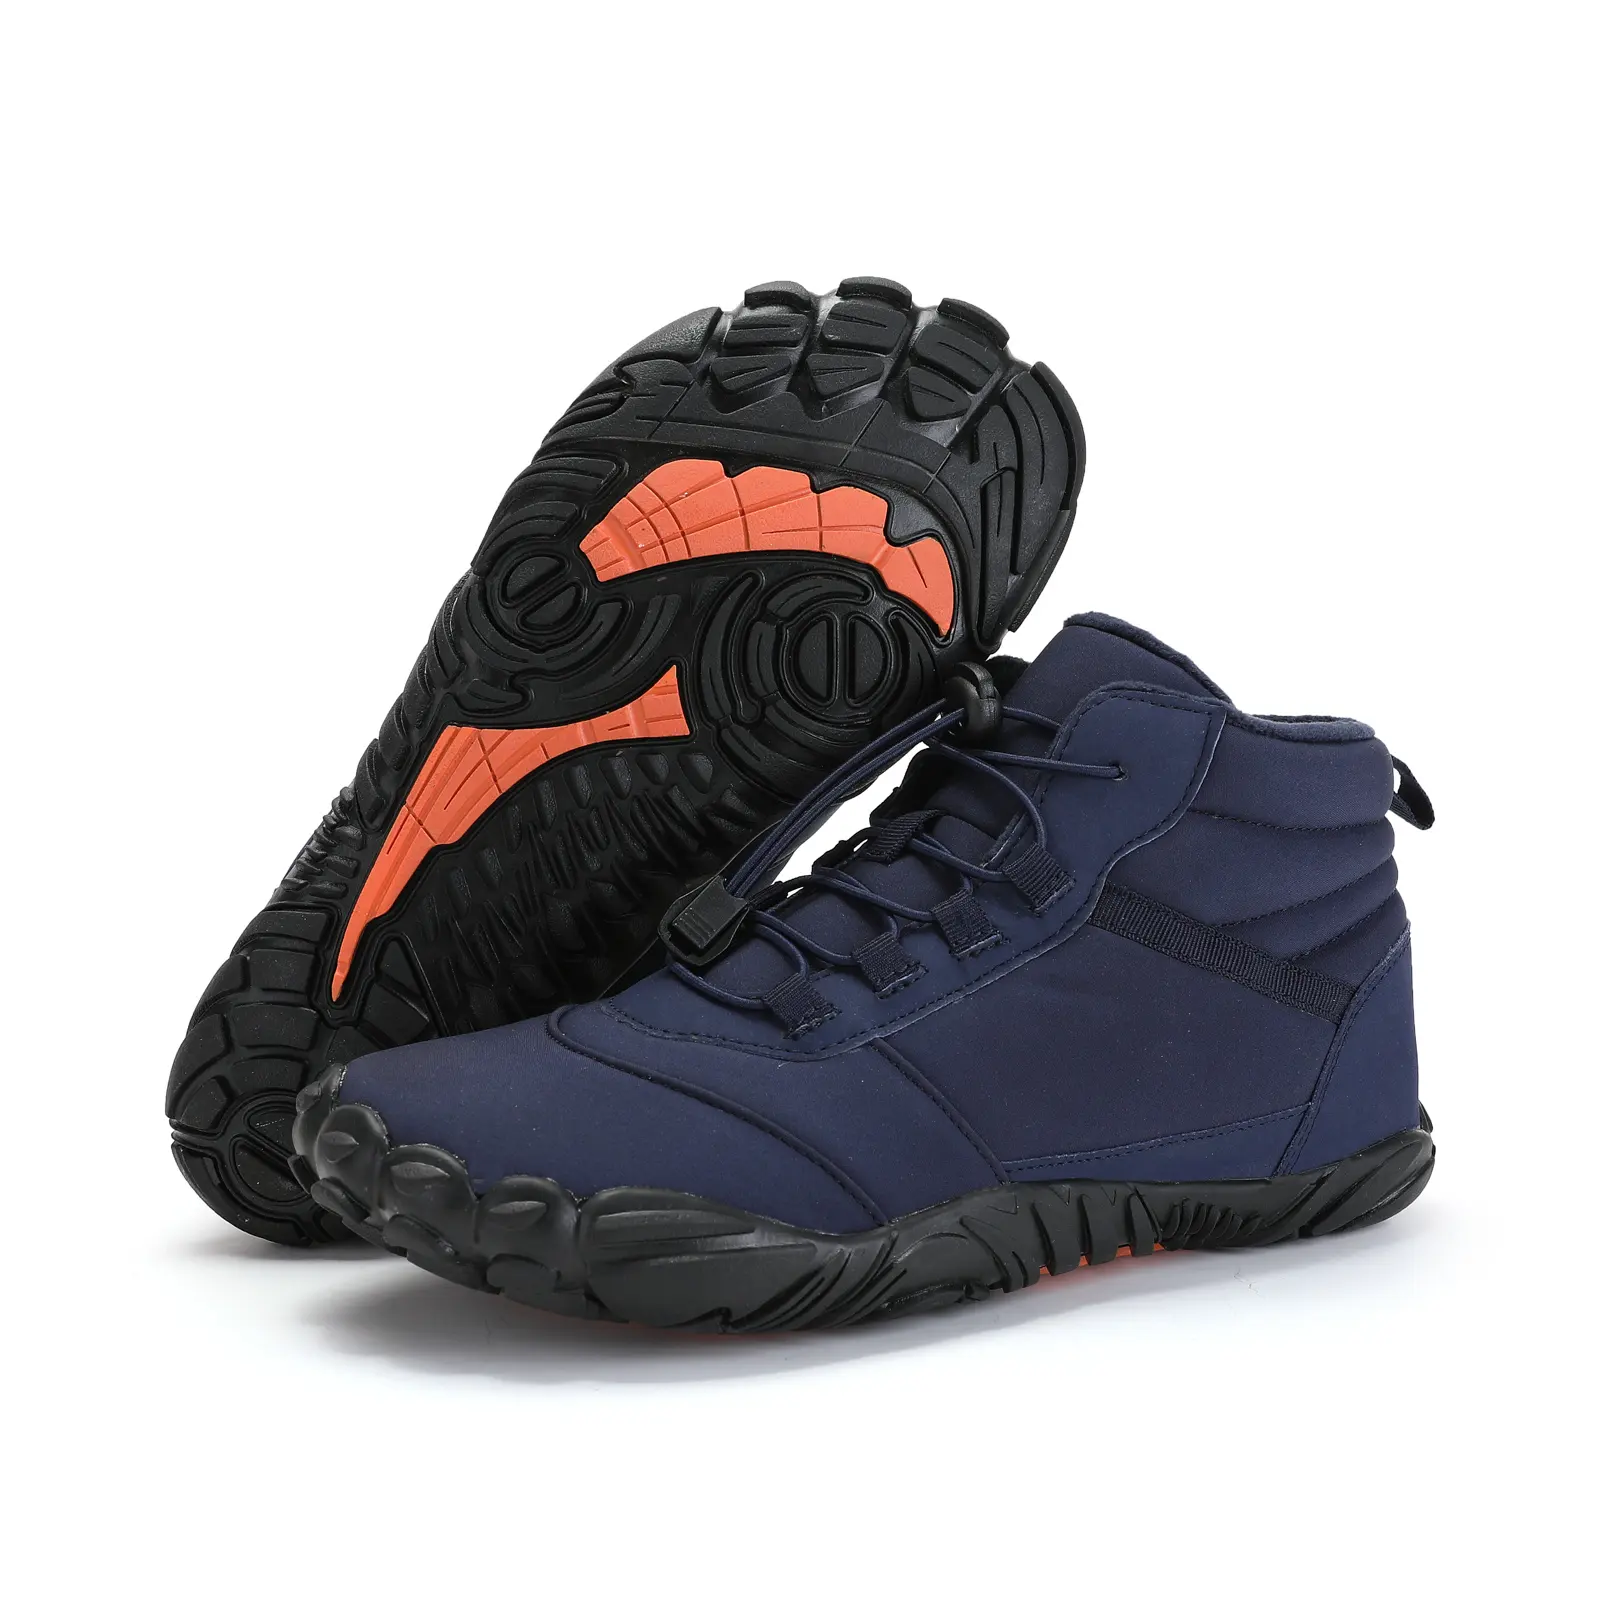 2022 New Style Zero Drop Wide Toe Box Minimalist Waterproof Trail Running barefoot shoes Hiking Winter Barefoot Boots